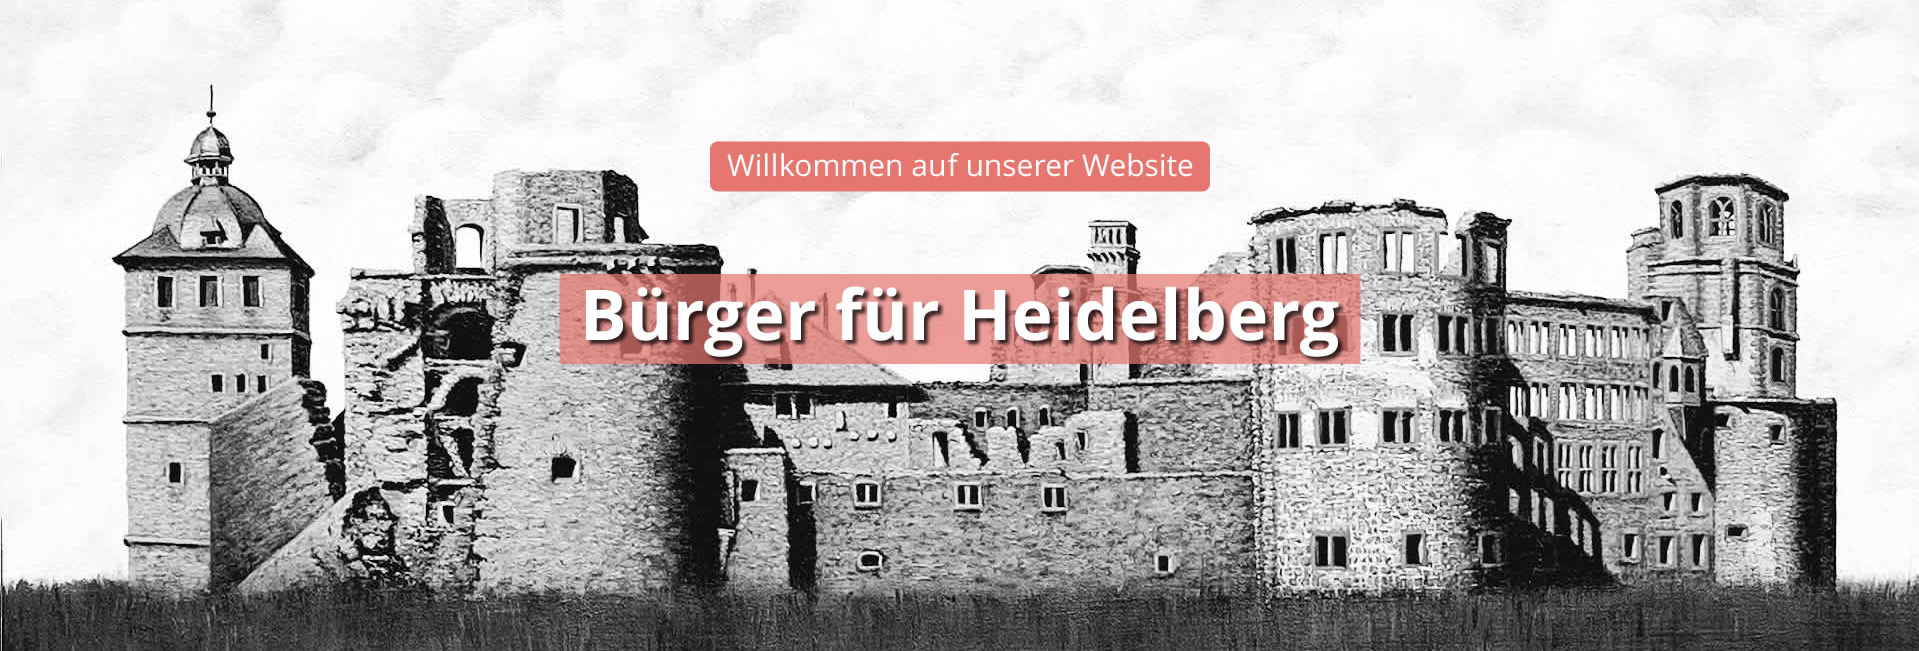 Bürger für Heidelberg